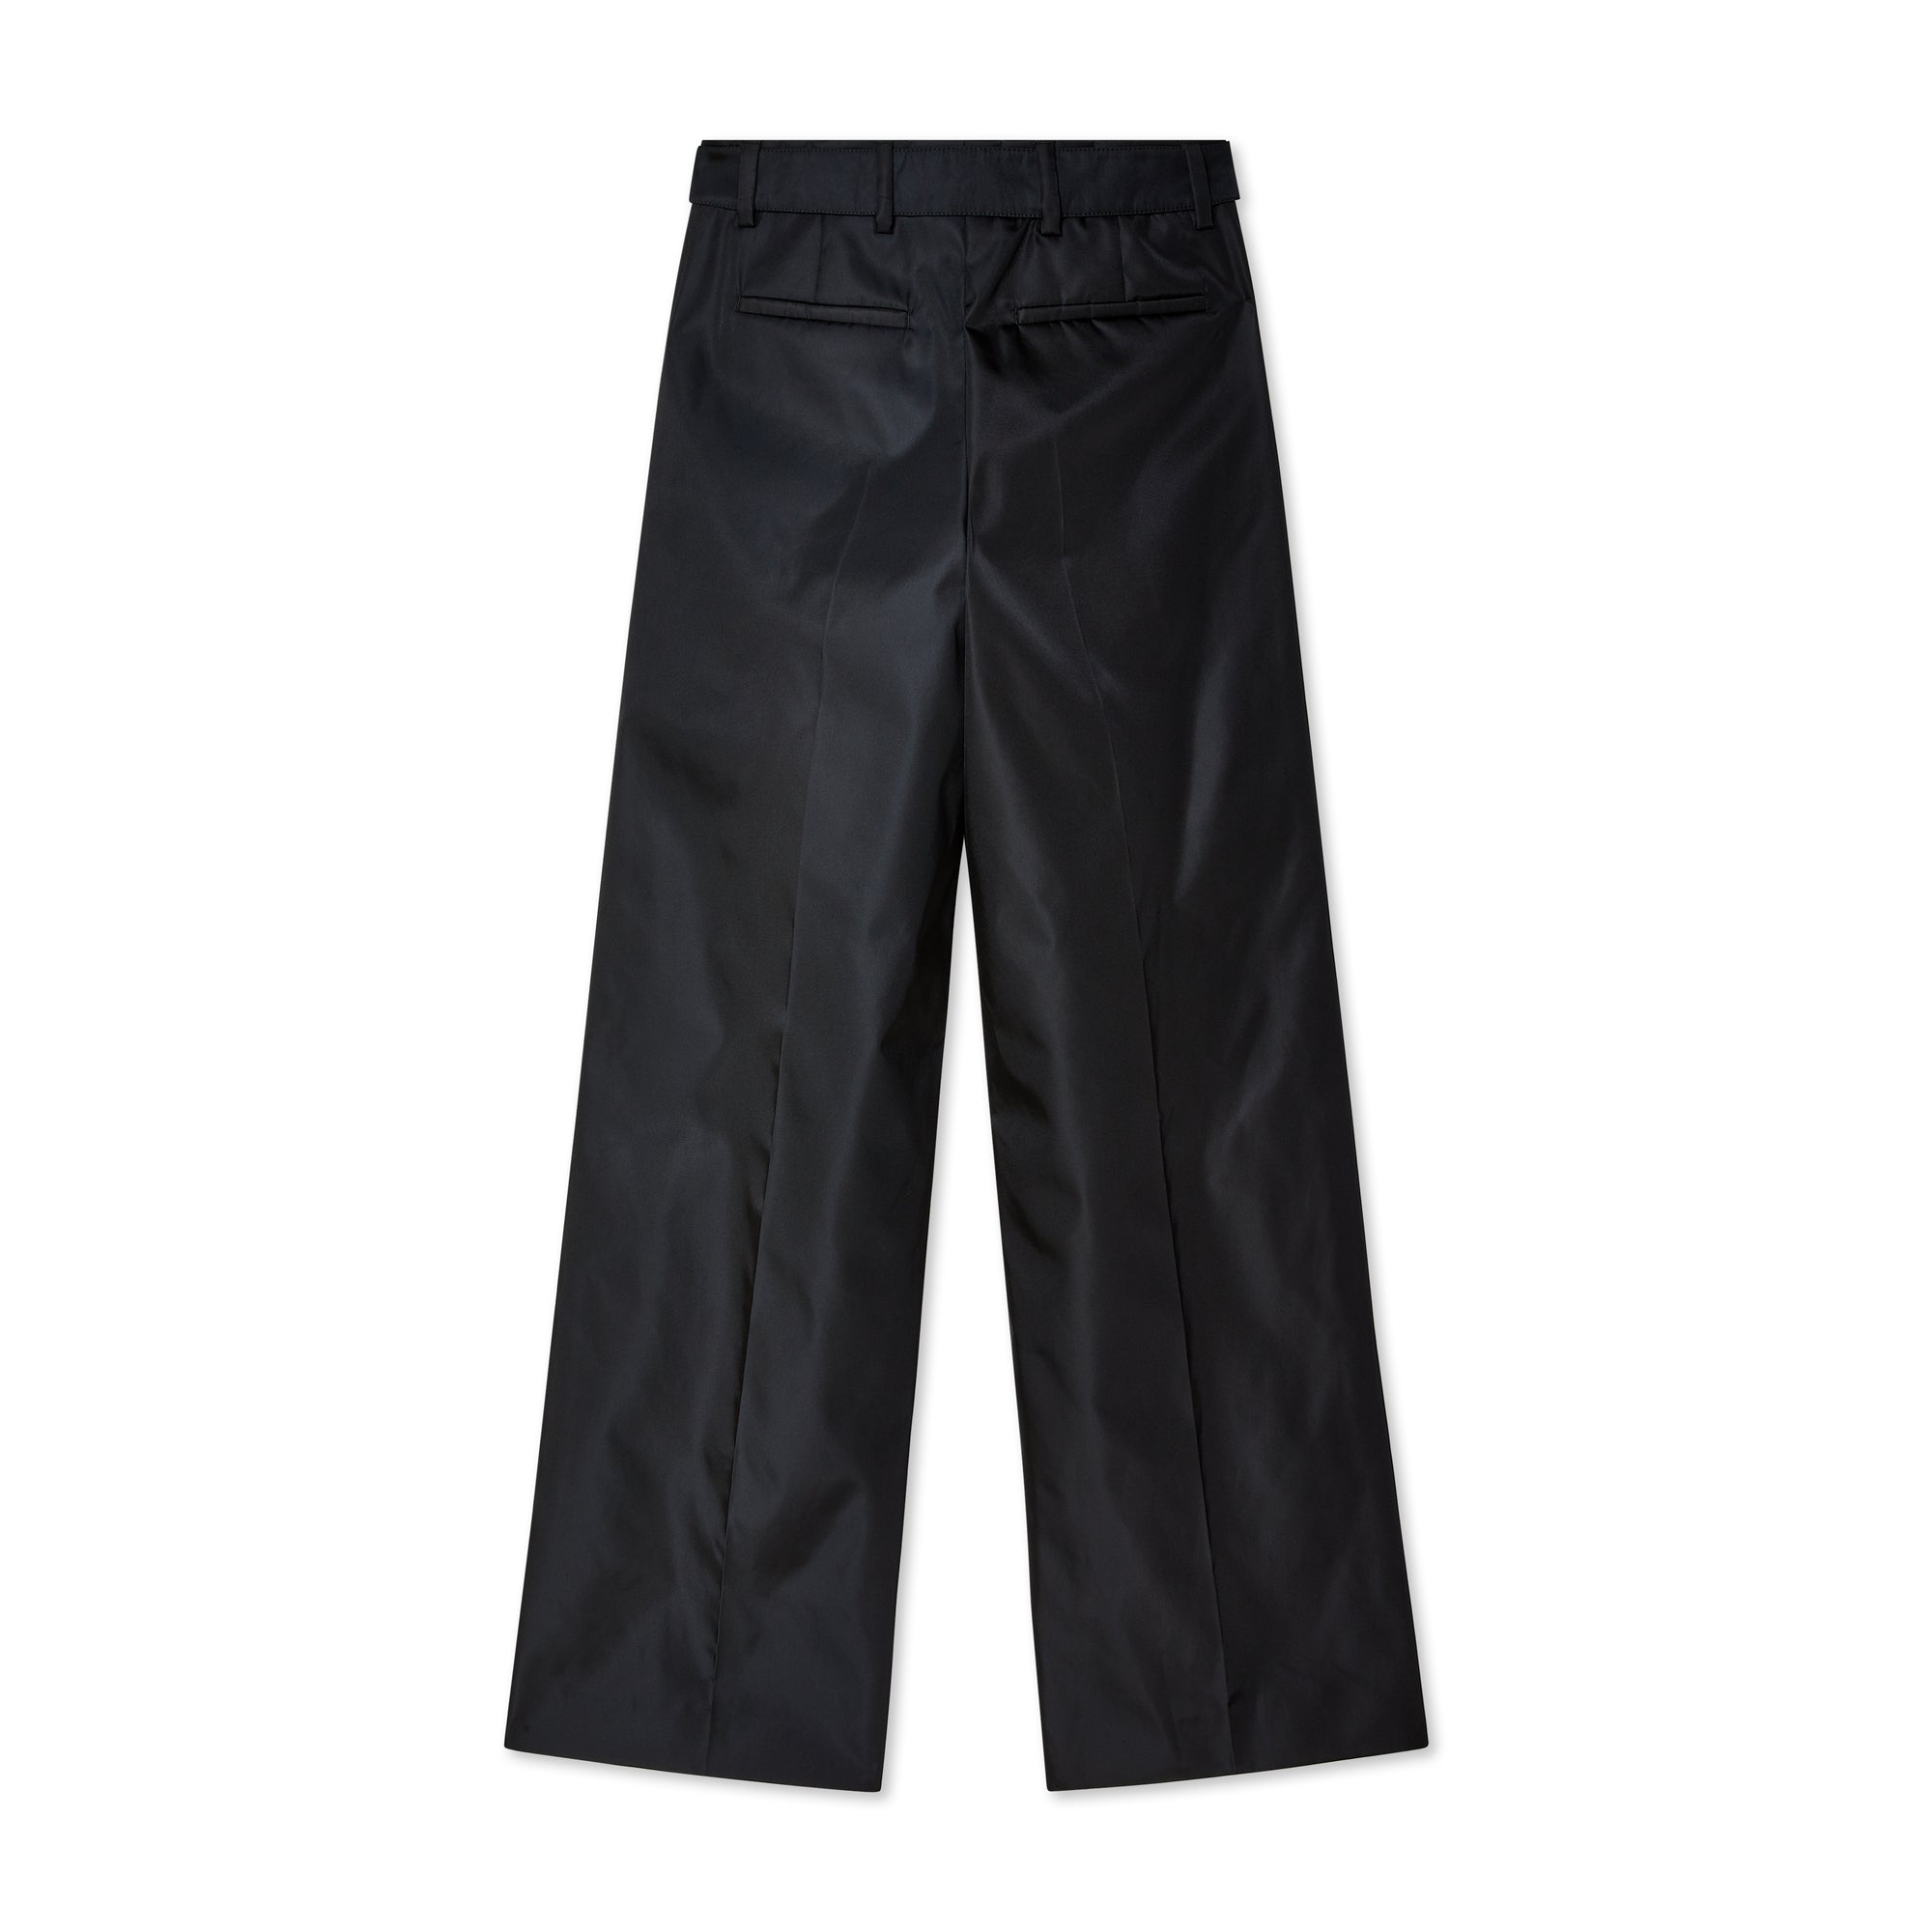 Prada - Women's Pants - (Black) view 2